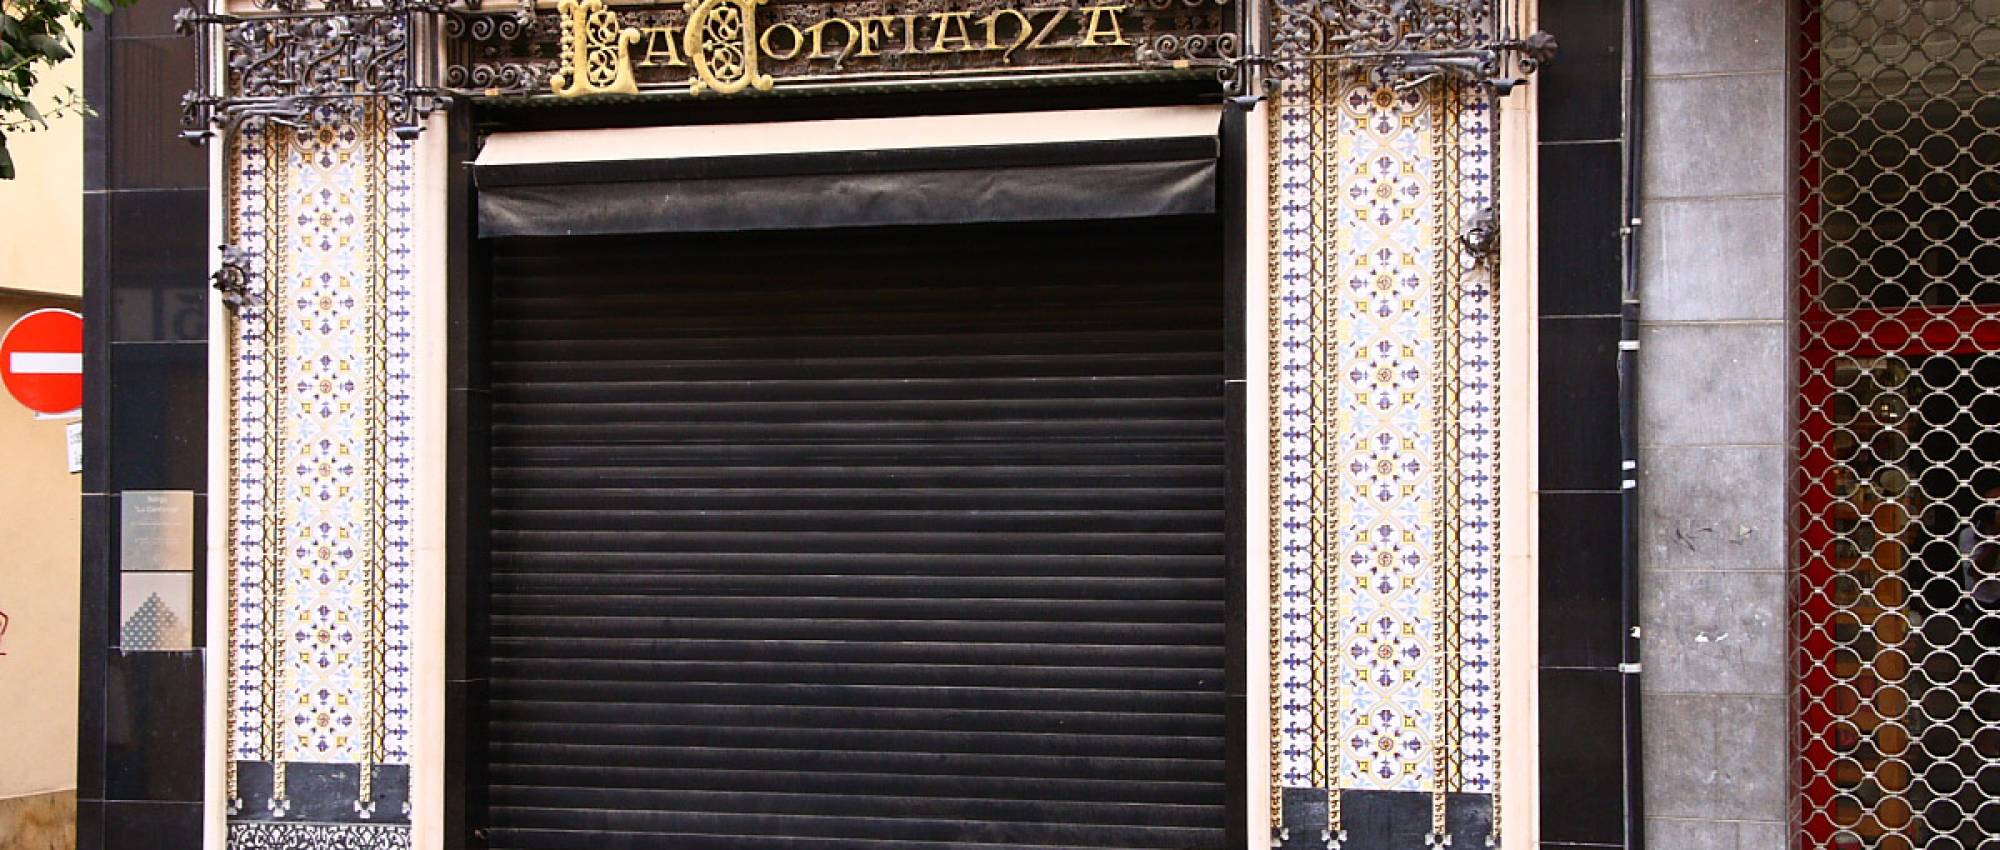 Porta de la Fideueria La Confiança de Mataró. CC BY 3.0 - amadalvarez / Wikimedia Commons